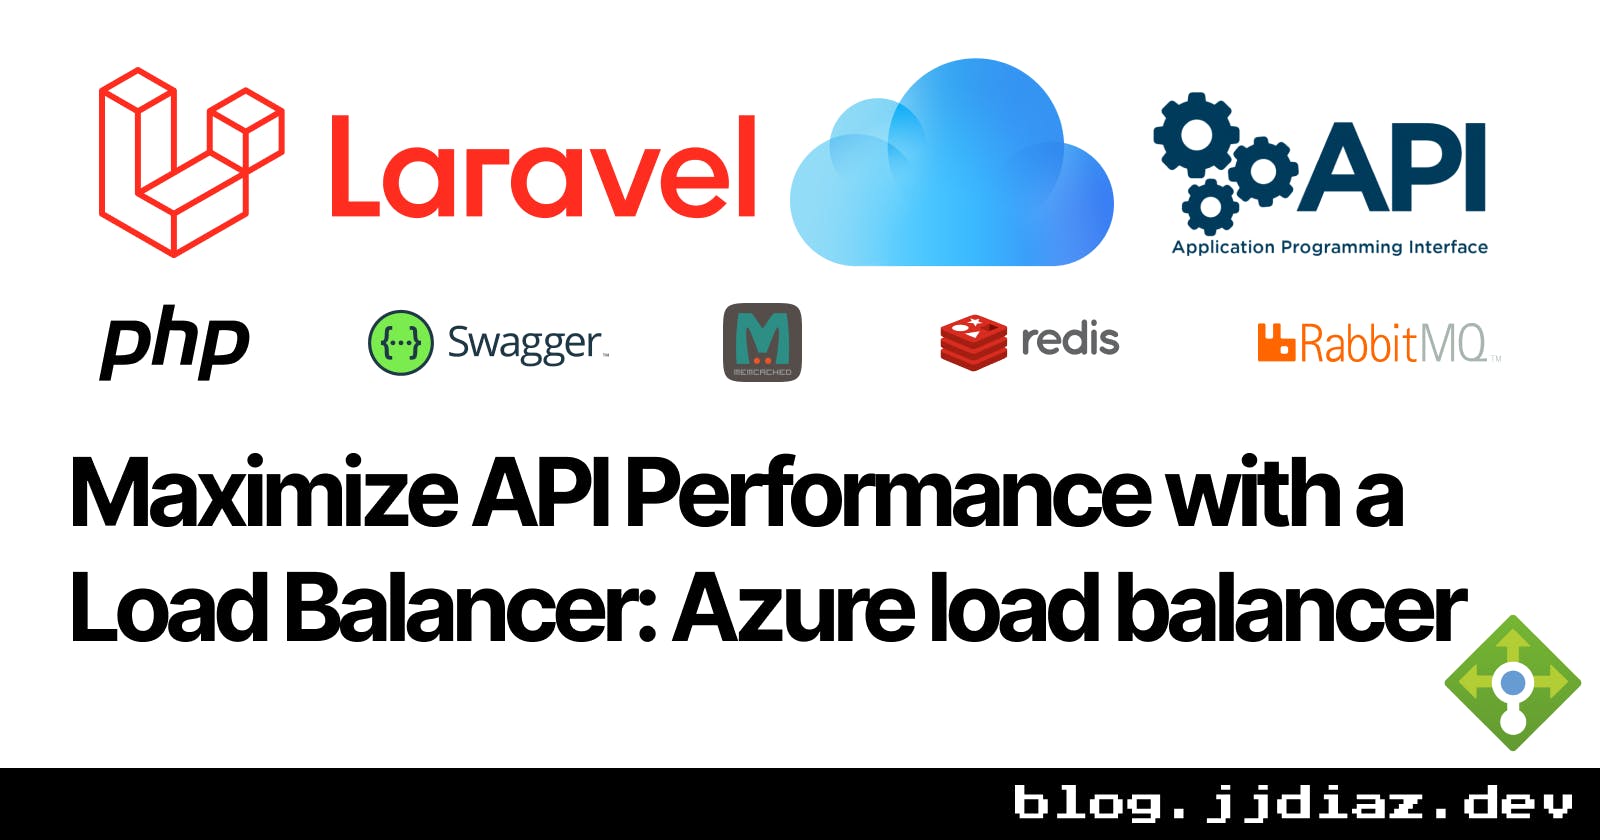 Maximize API Performance with a Load Balancer: Azure load balancer